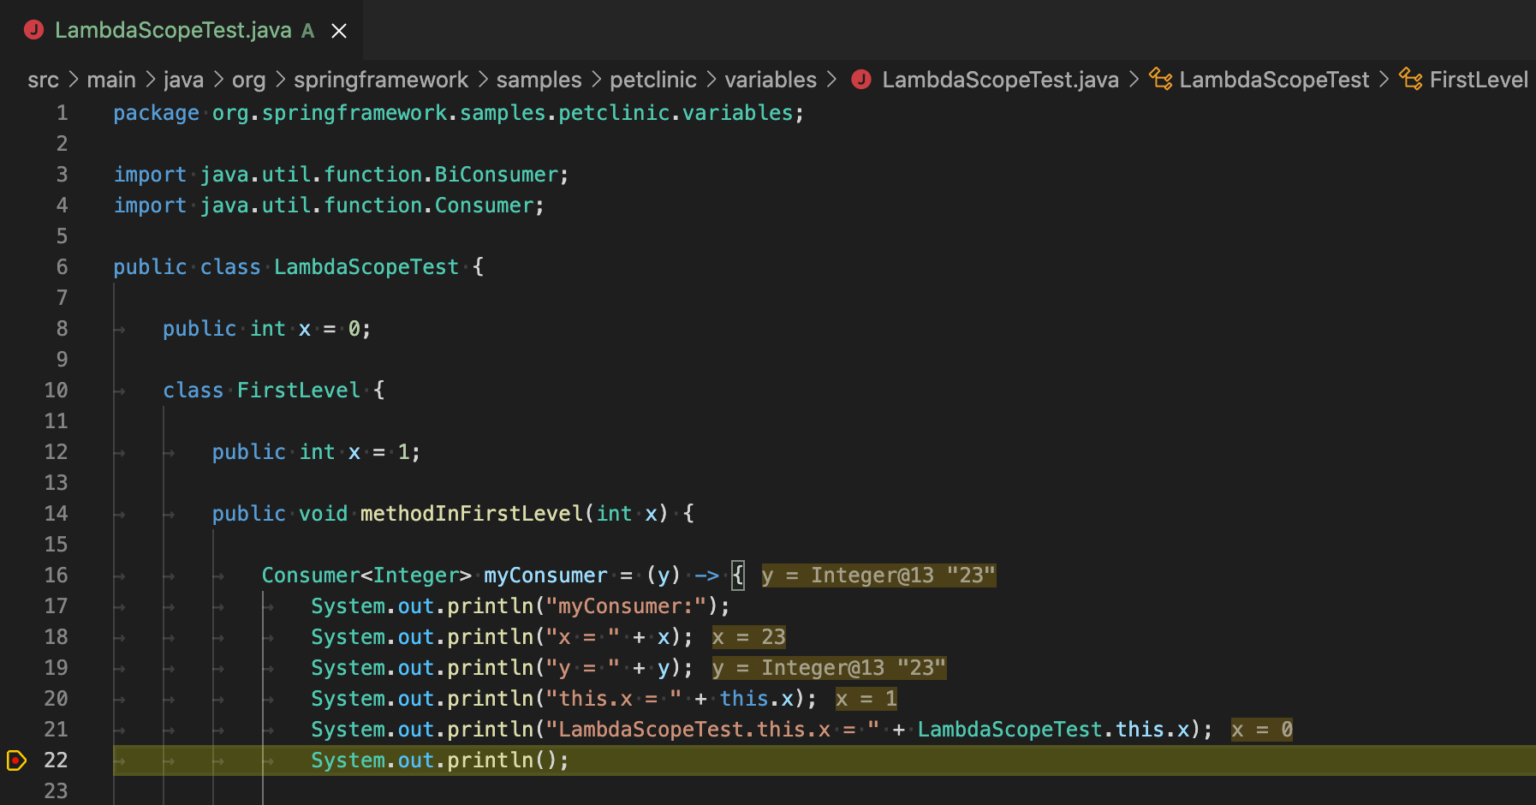 java extension for visual studio code